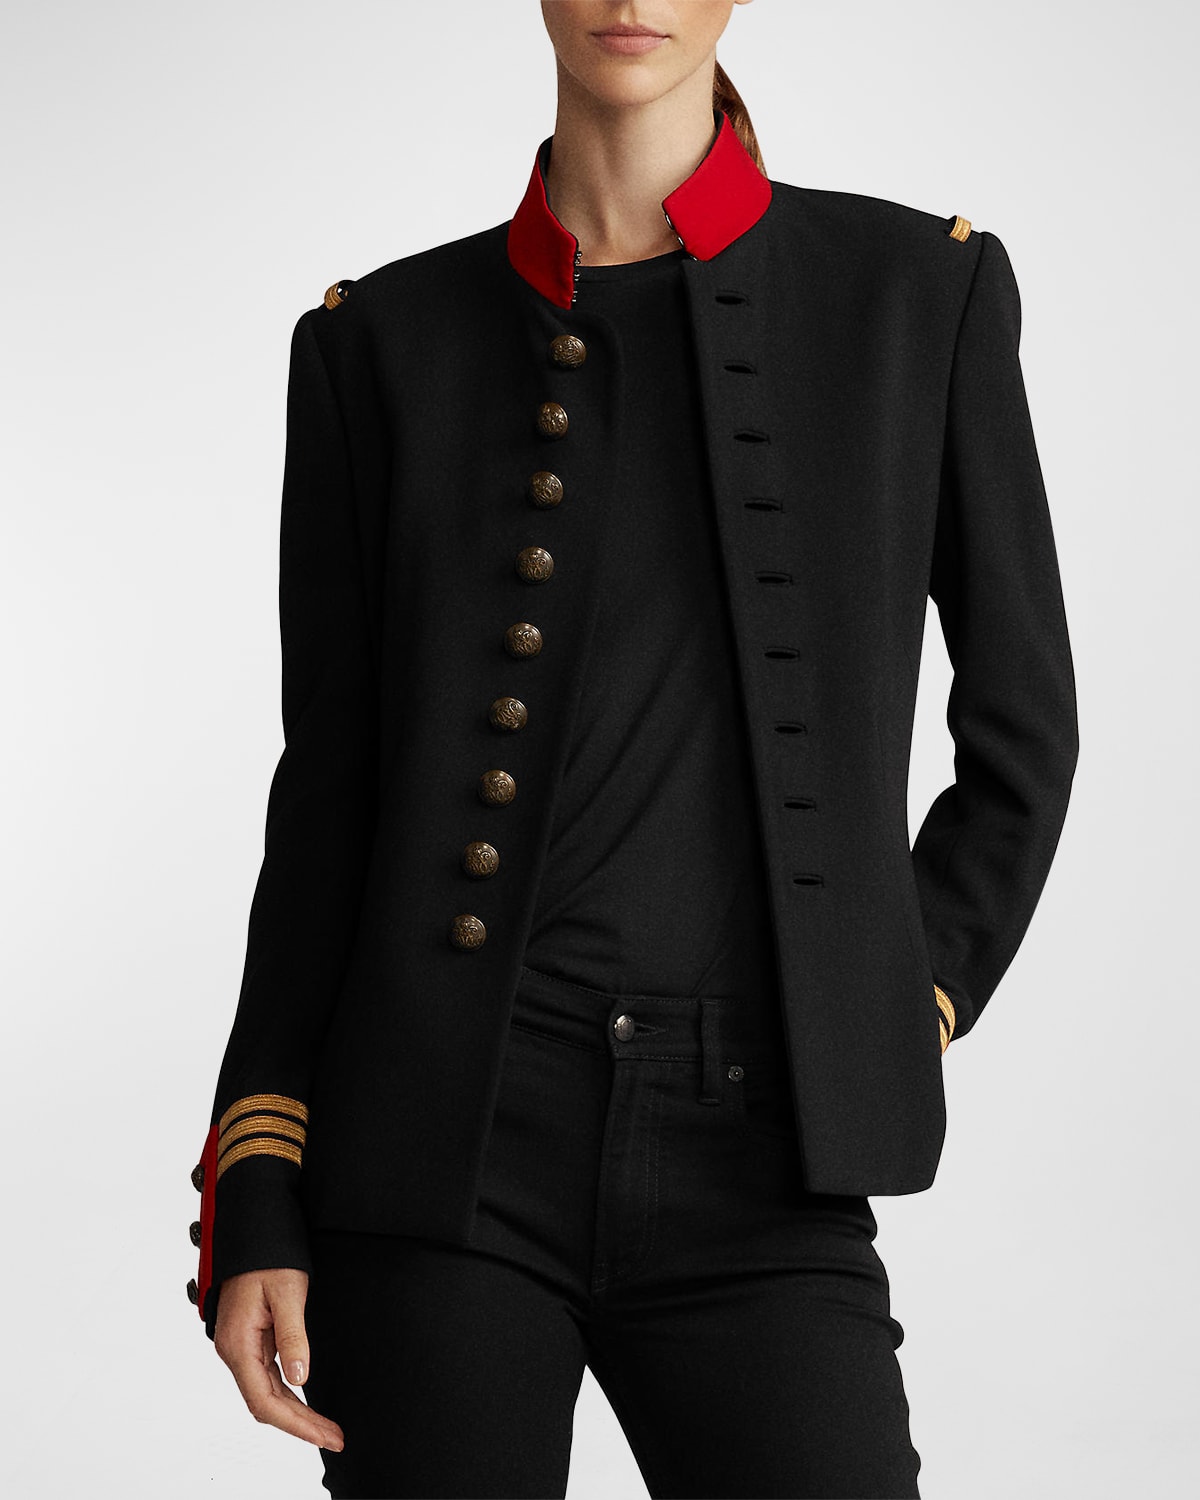 The Officer's Jacket, Black